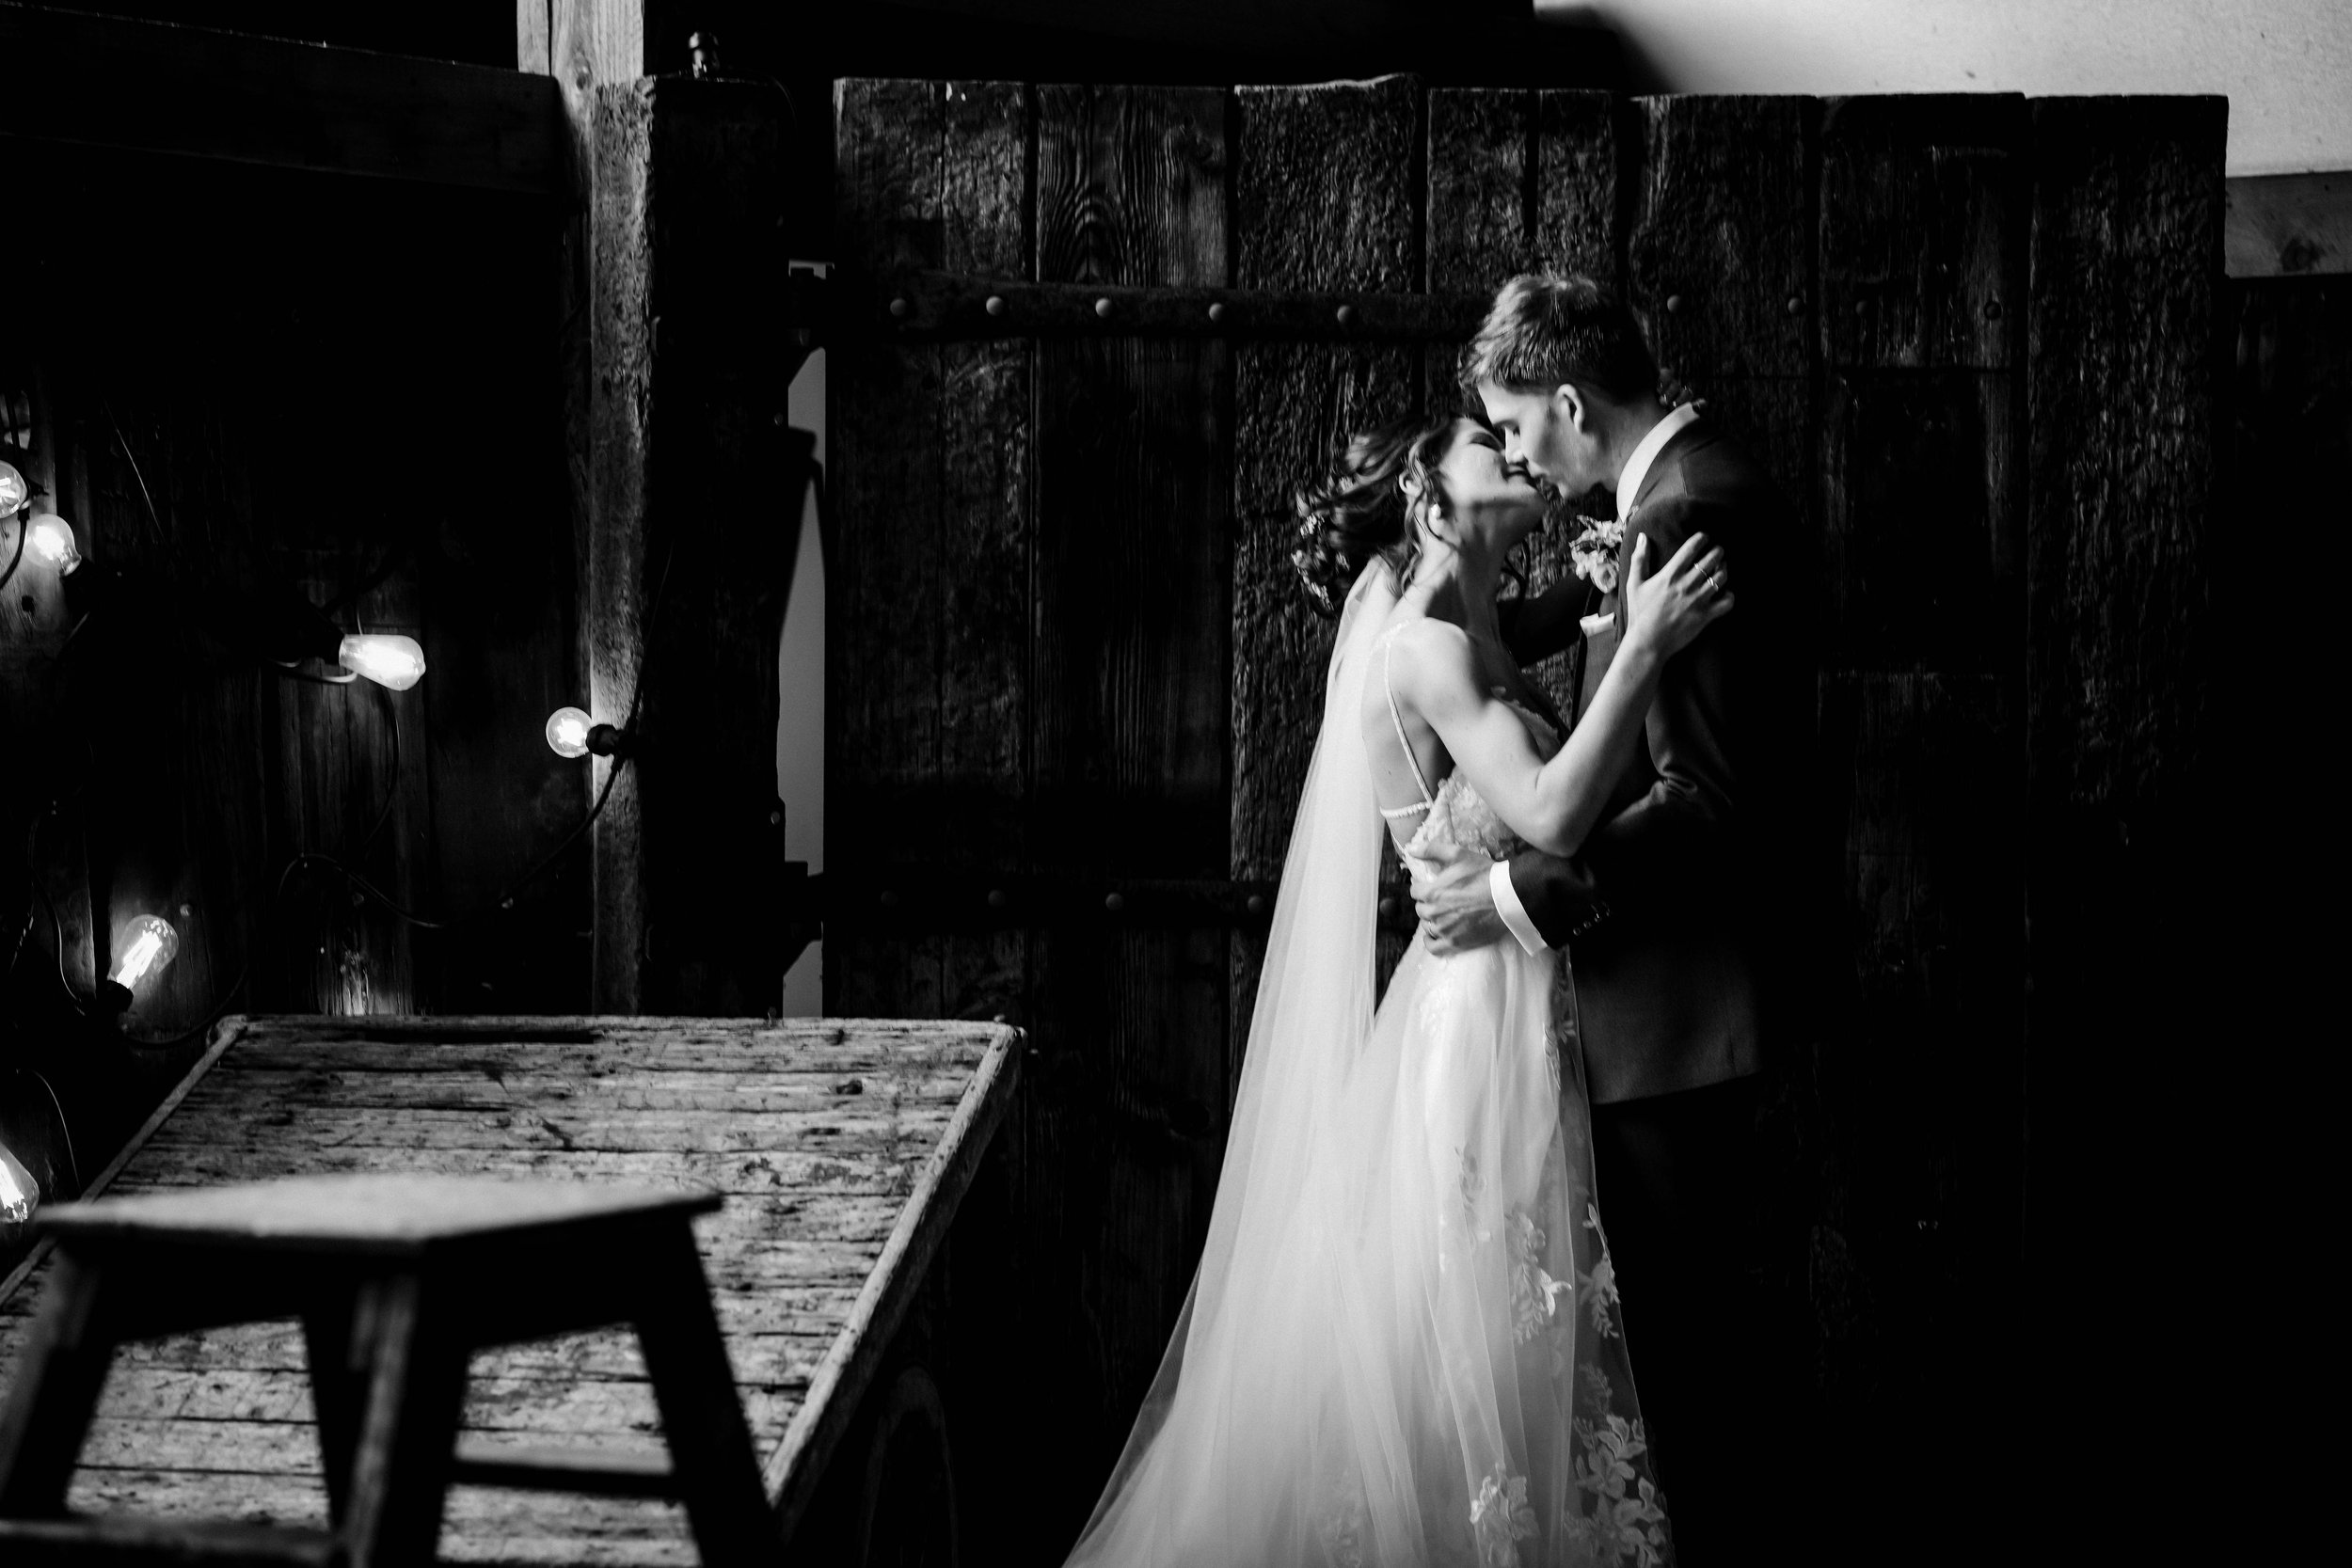 owen house wedding barn cheshire photography 035.jpg